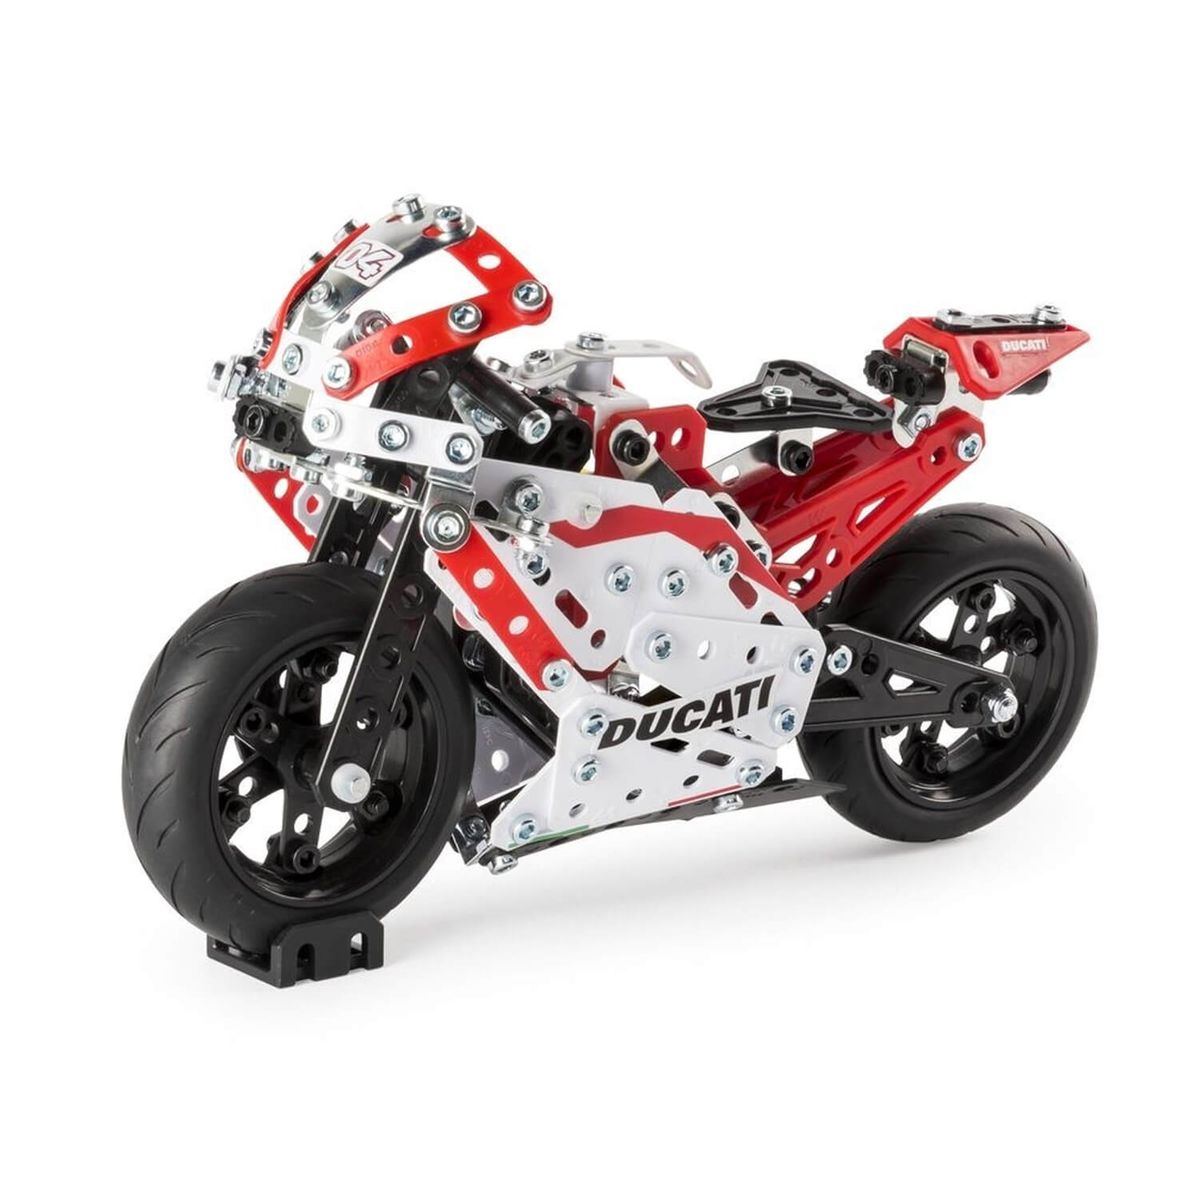 : Ducati Moto GP